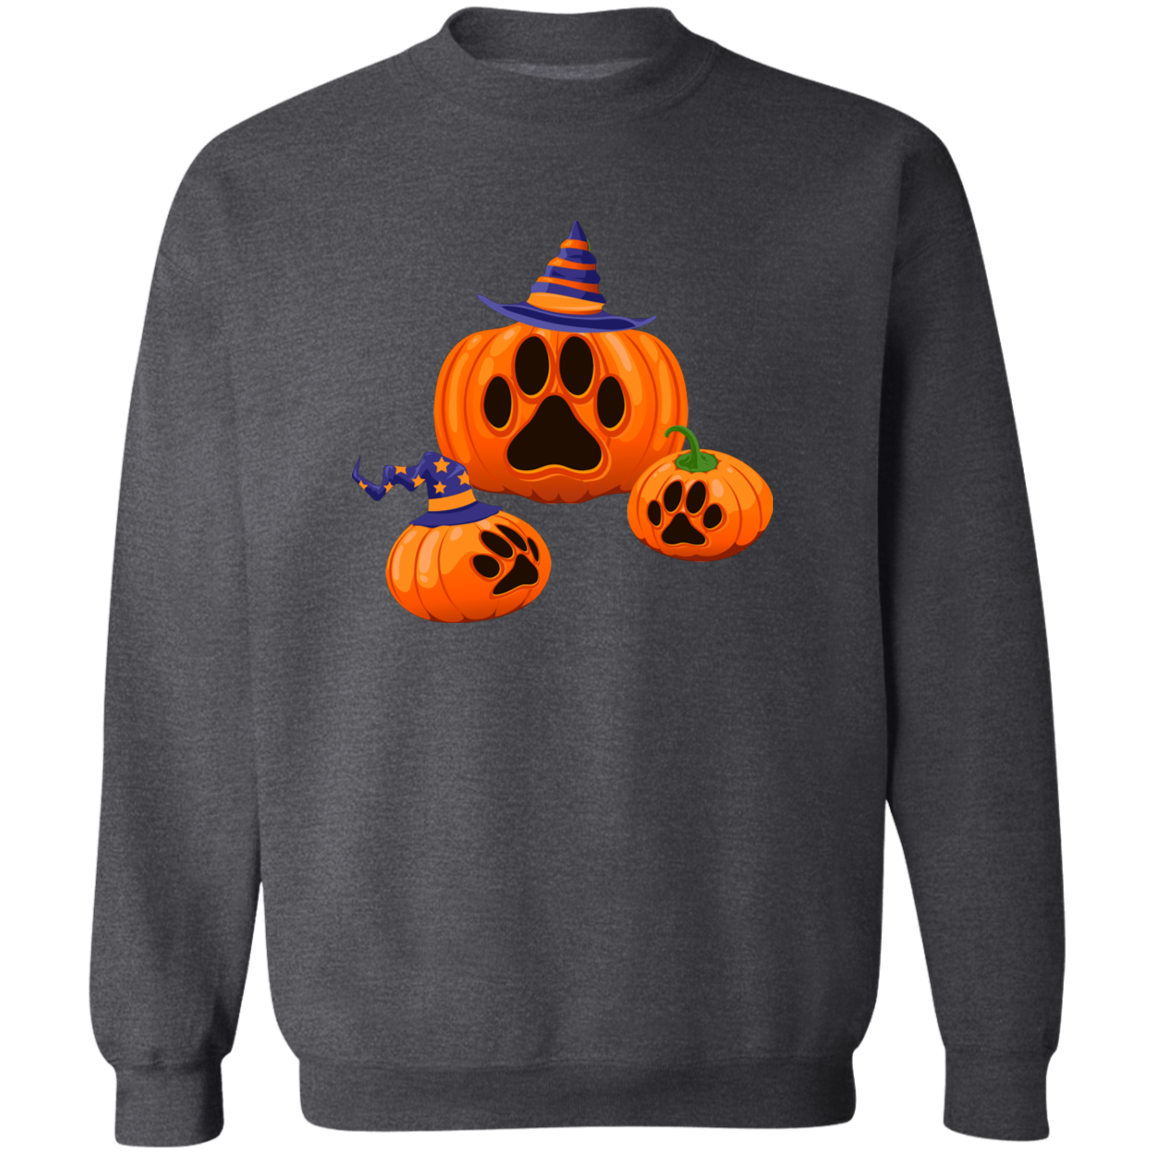 Halloween Paw Print Pumpkin Crewneck Pullover Sweatshirt